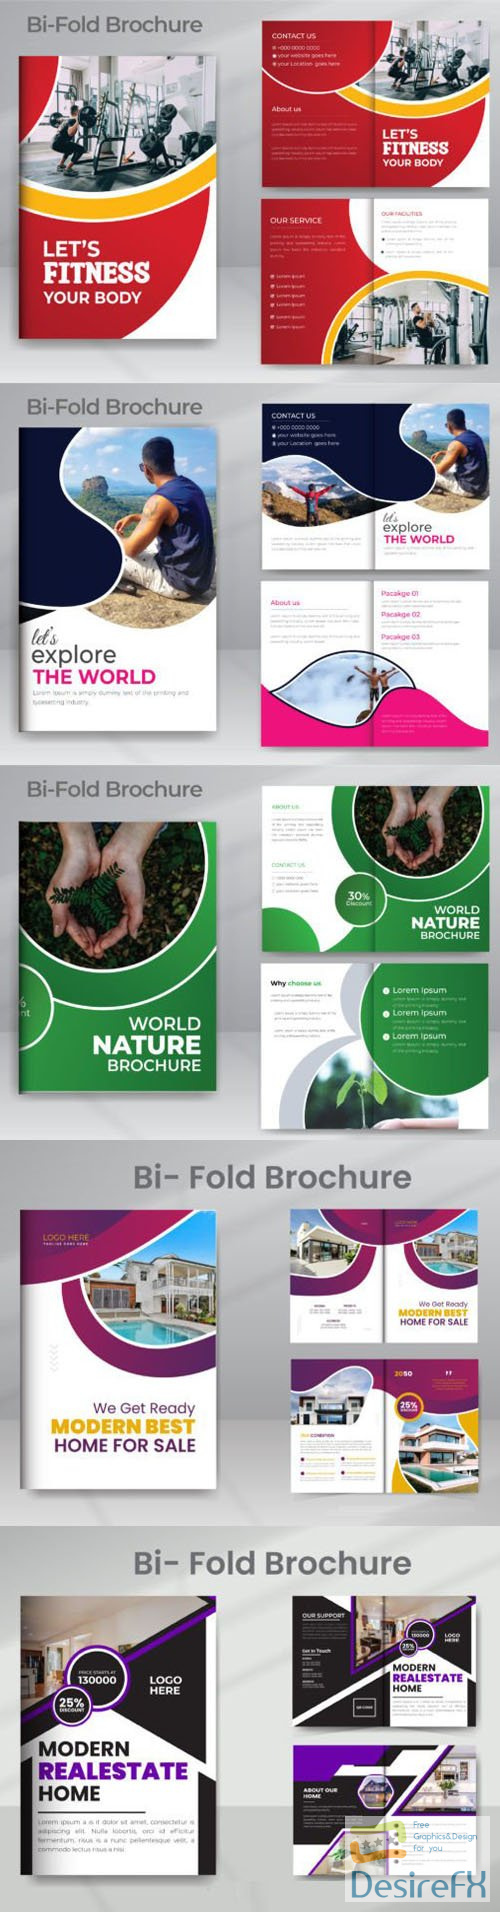 5 Bi-Fold Brochures Templates for Illustrator